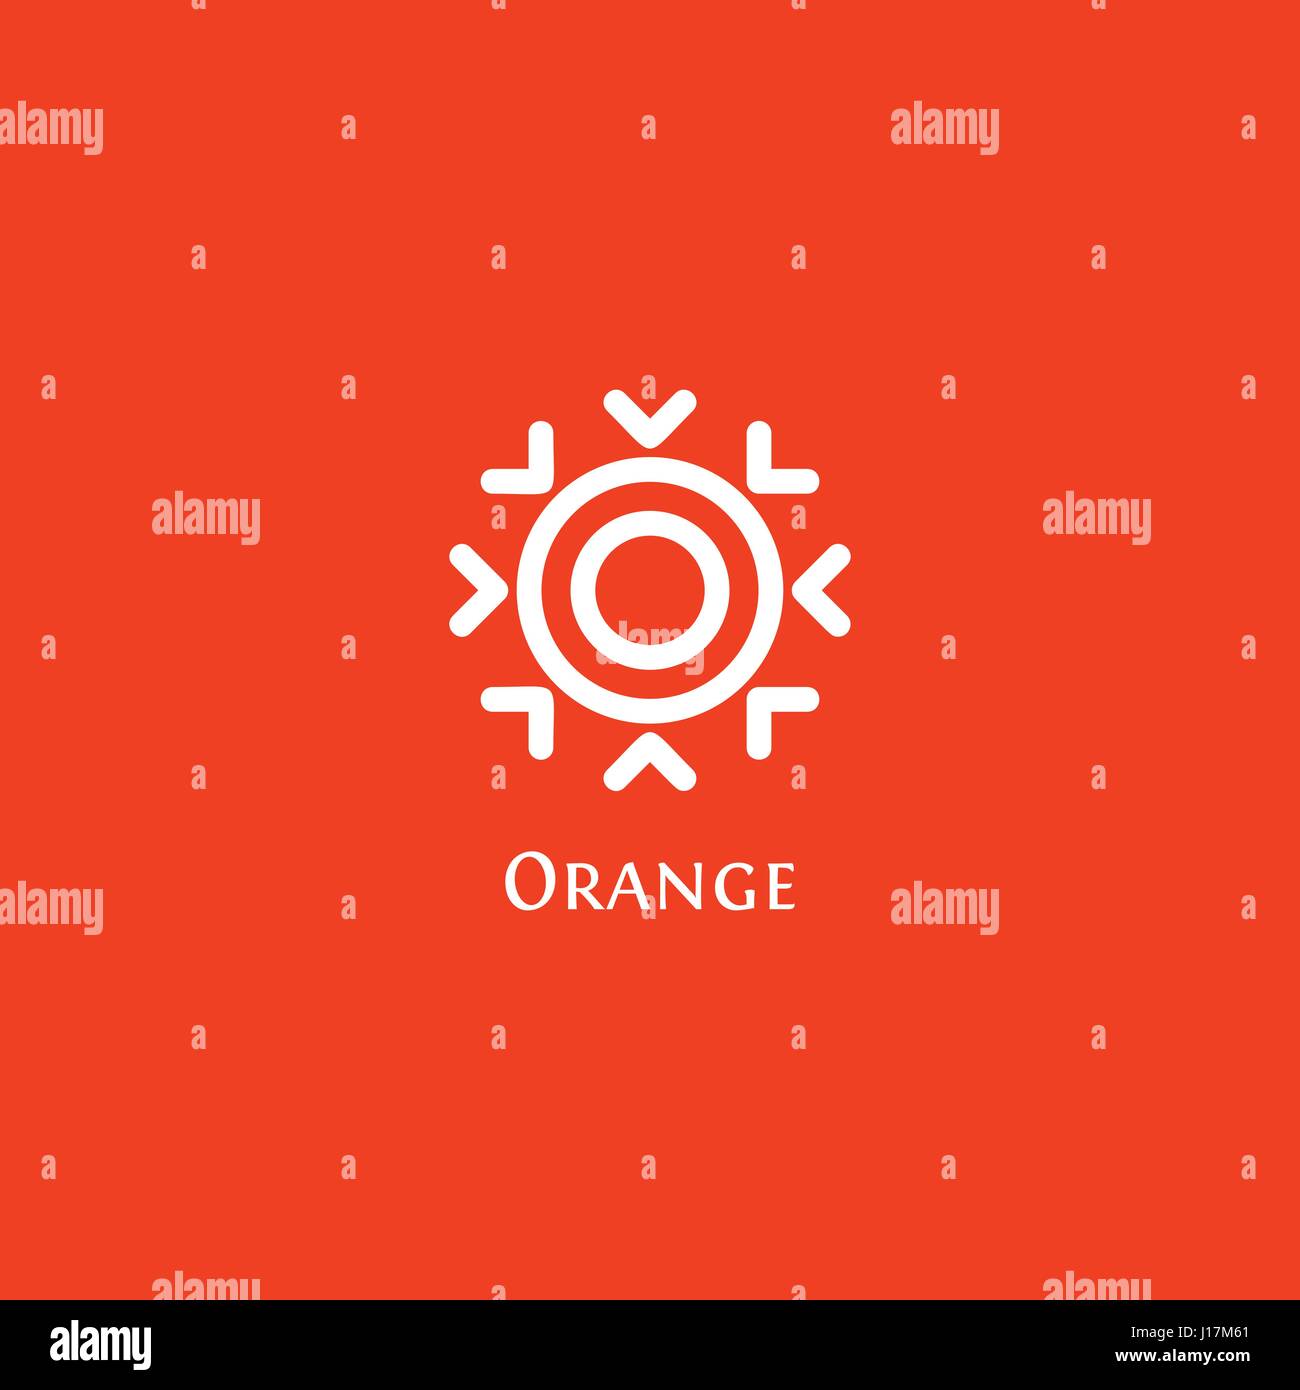 Isolierte abstrakt Runde Form Farbe orange Logo, Sonne-Logo-Vektor-Illustration auf rotem Grund Stock Vektor